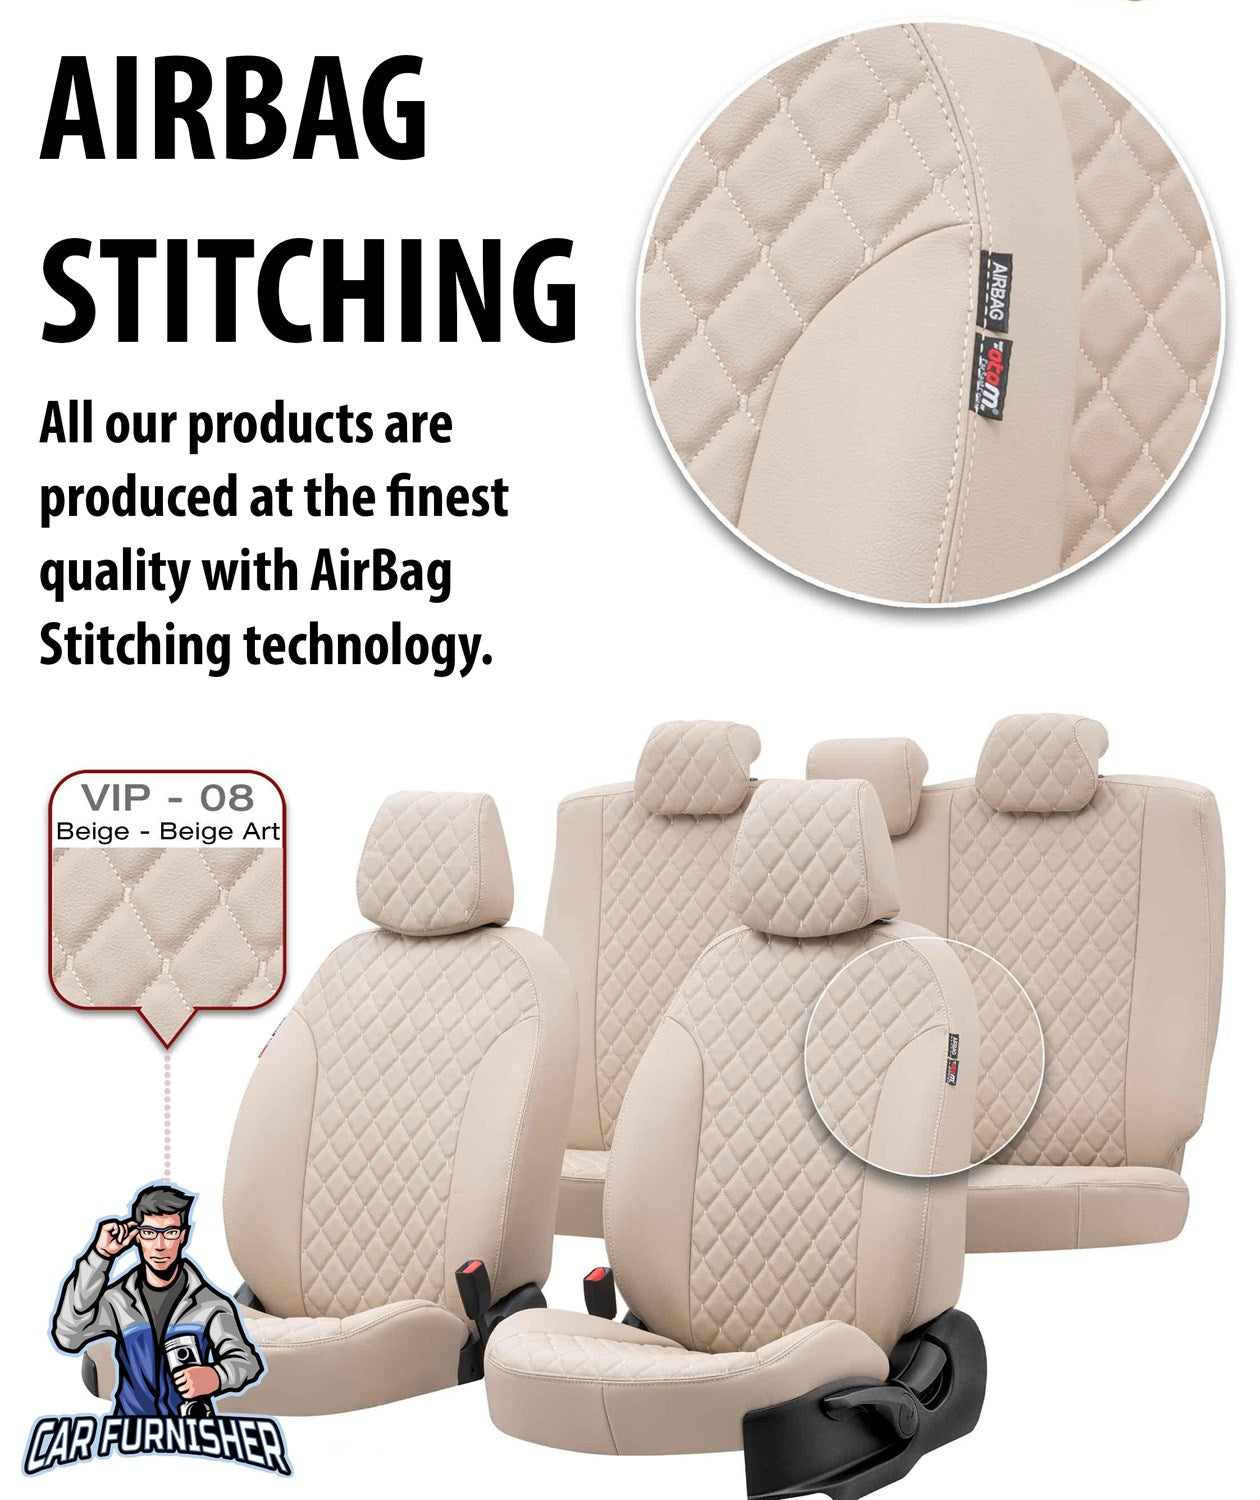 Tata Xenon Seat Covers Madrid Leather Design Beige Leather